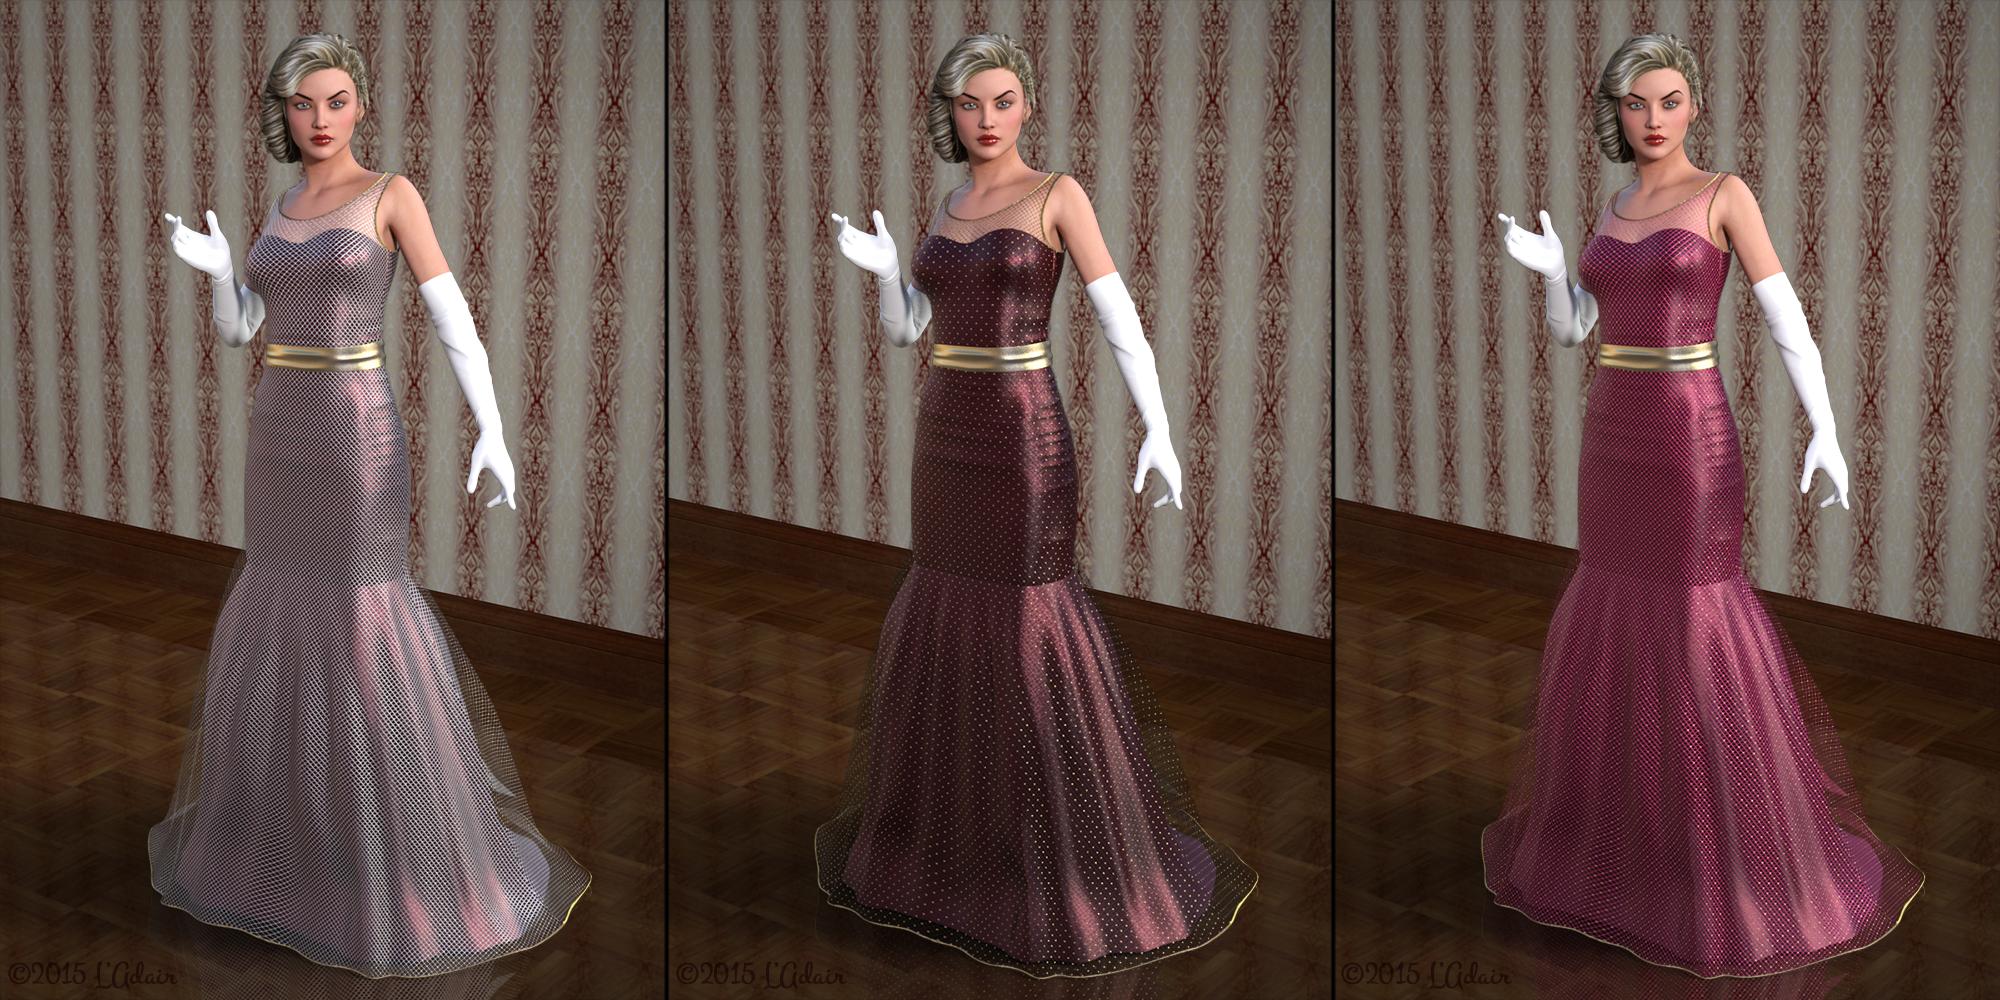 Evening Gown tulle color comparison, by L'Adair